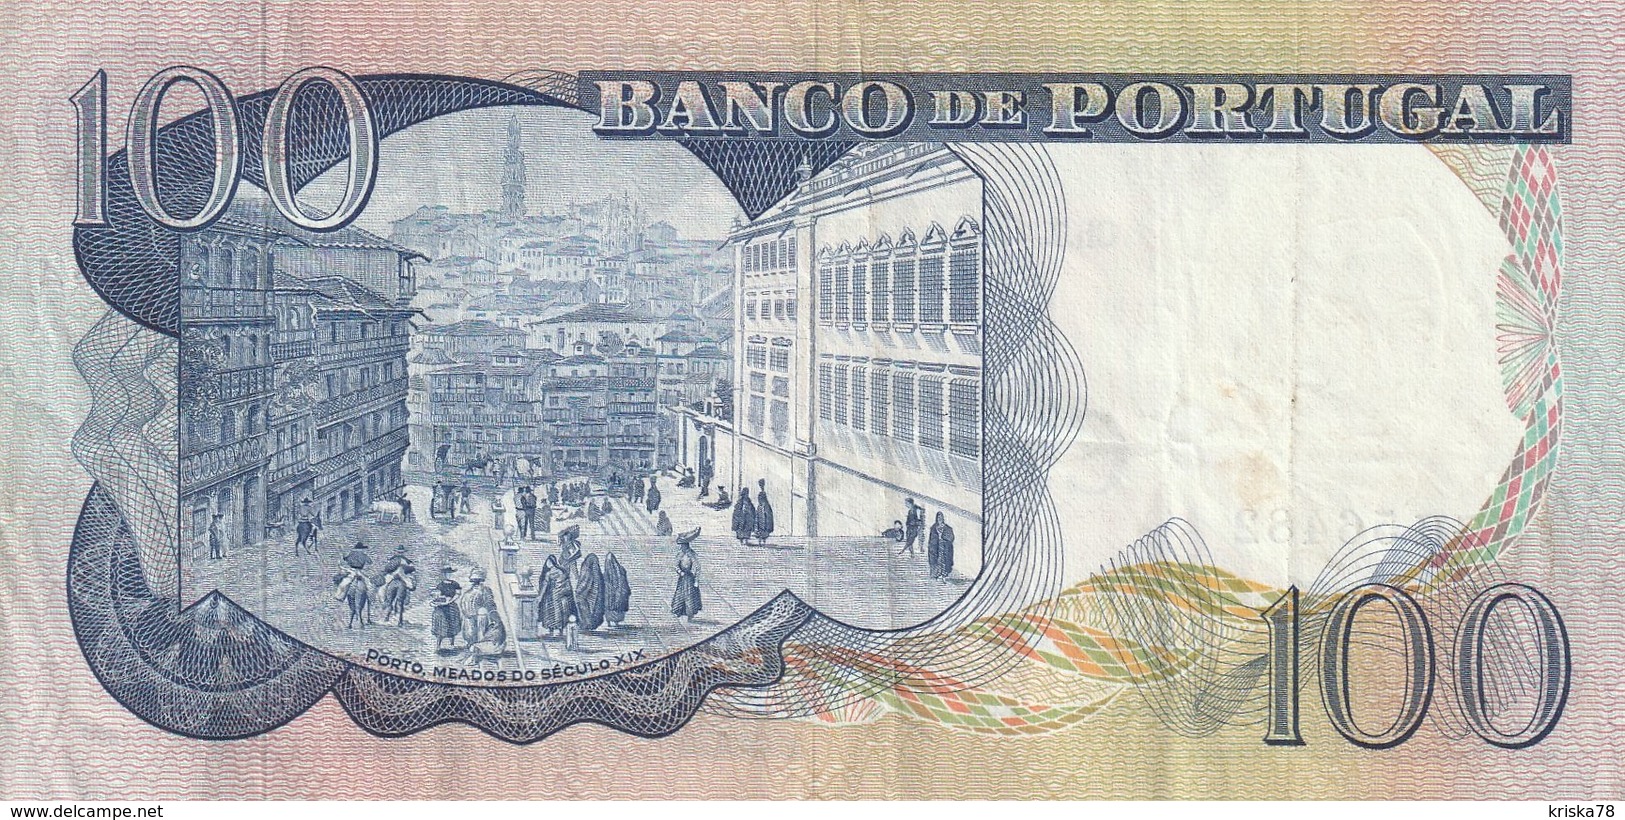 100 ESCUDOS 1965 - Portugal